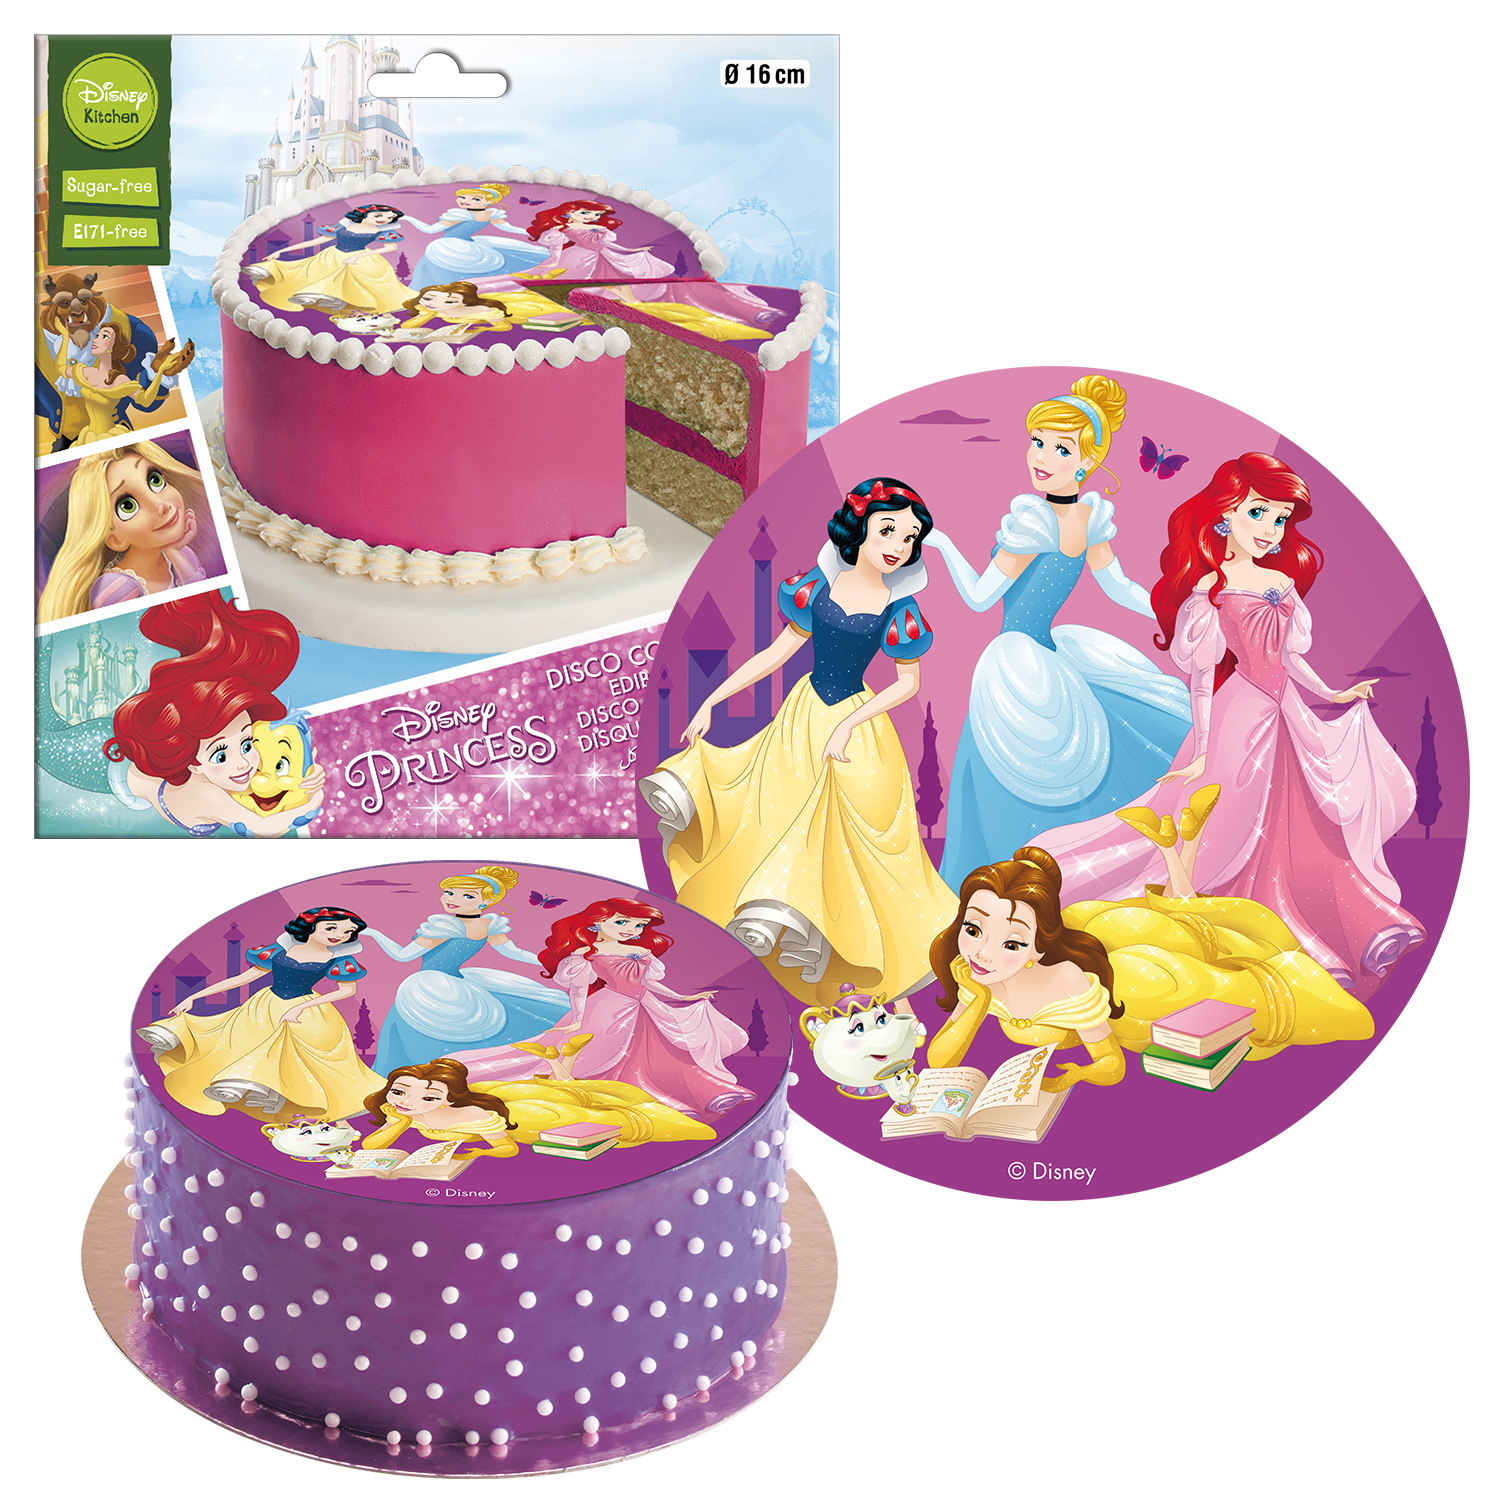 Sugarfree discs, 16 cm, Princess Disney